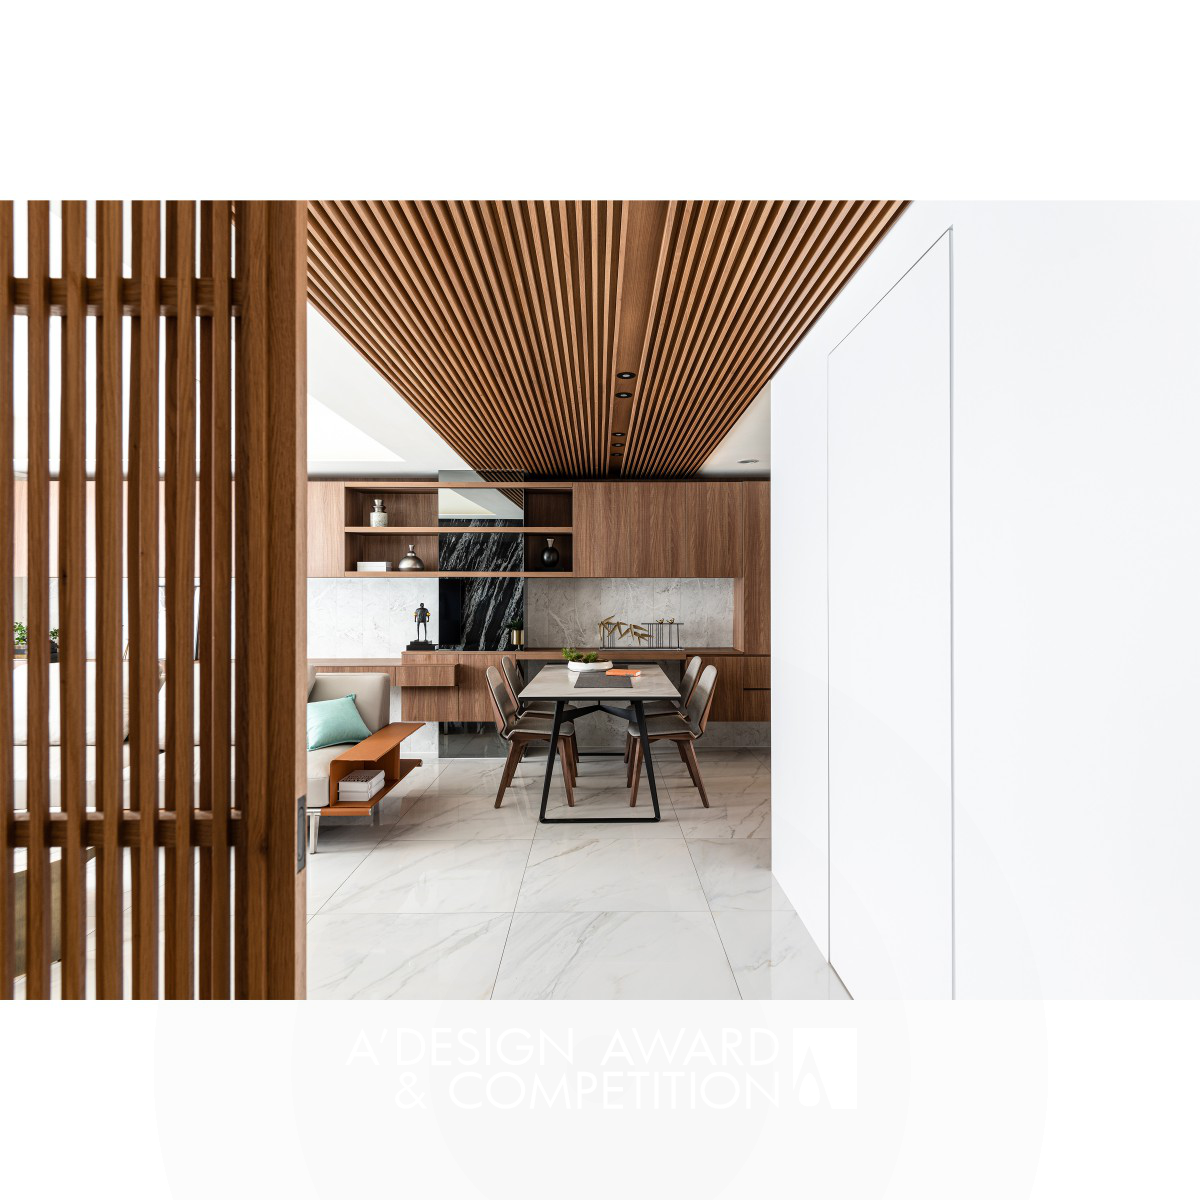 Subtle Undertones Residential interior design  by Kai Yuan Cheng